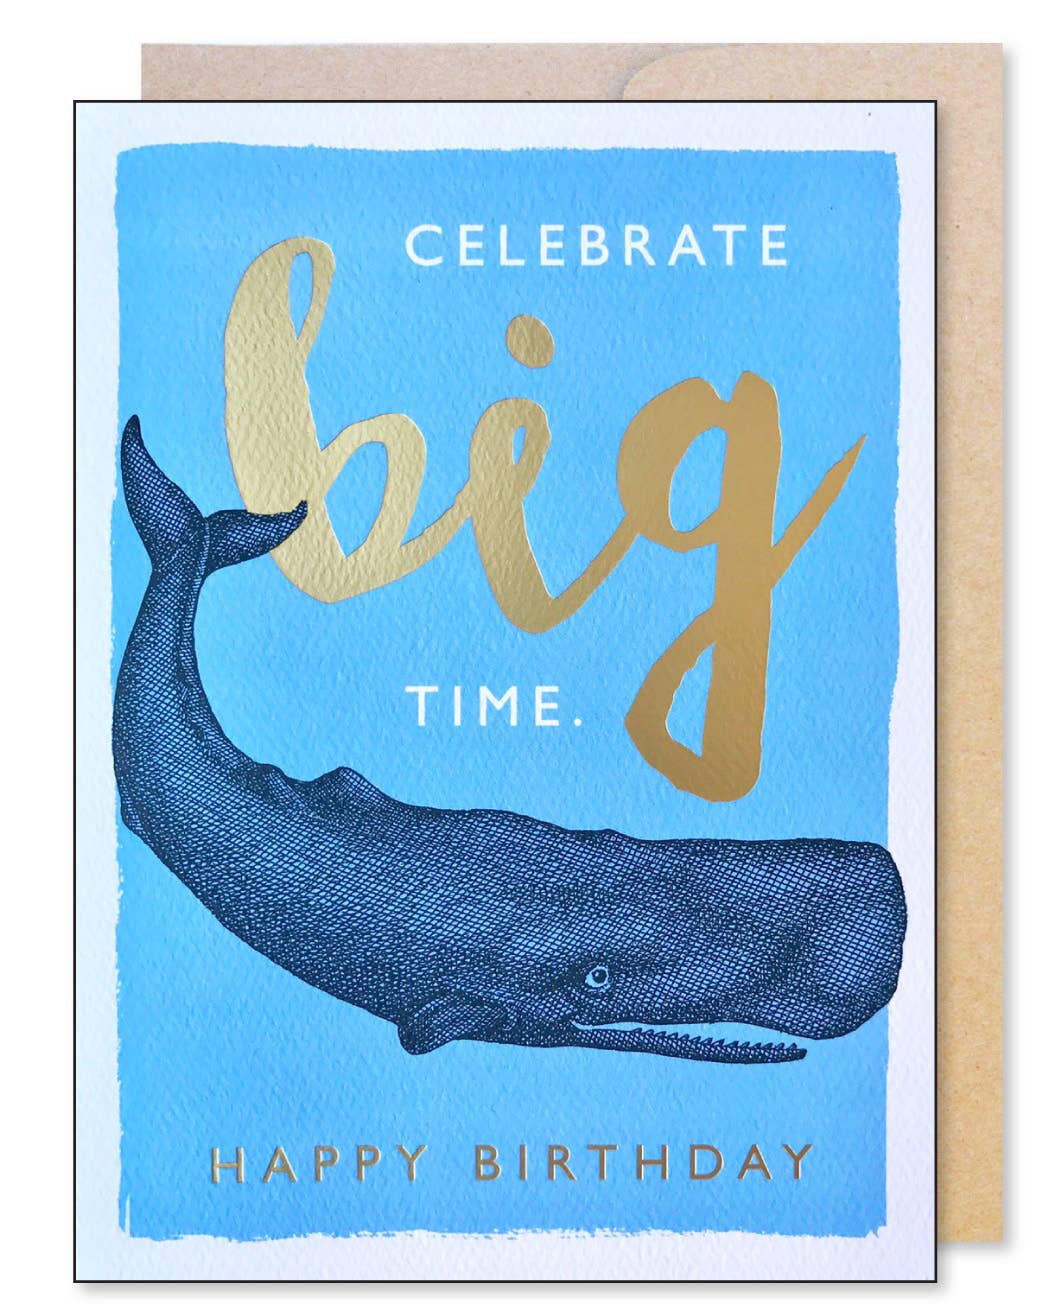 Celebrate Big Time Whale Birthday card